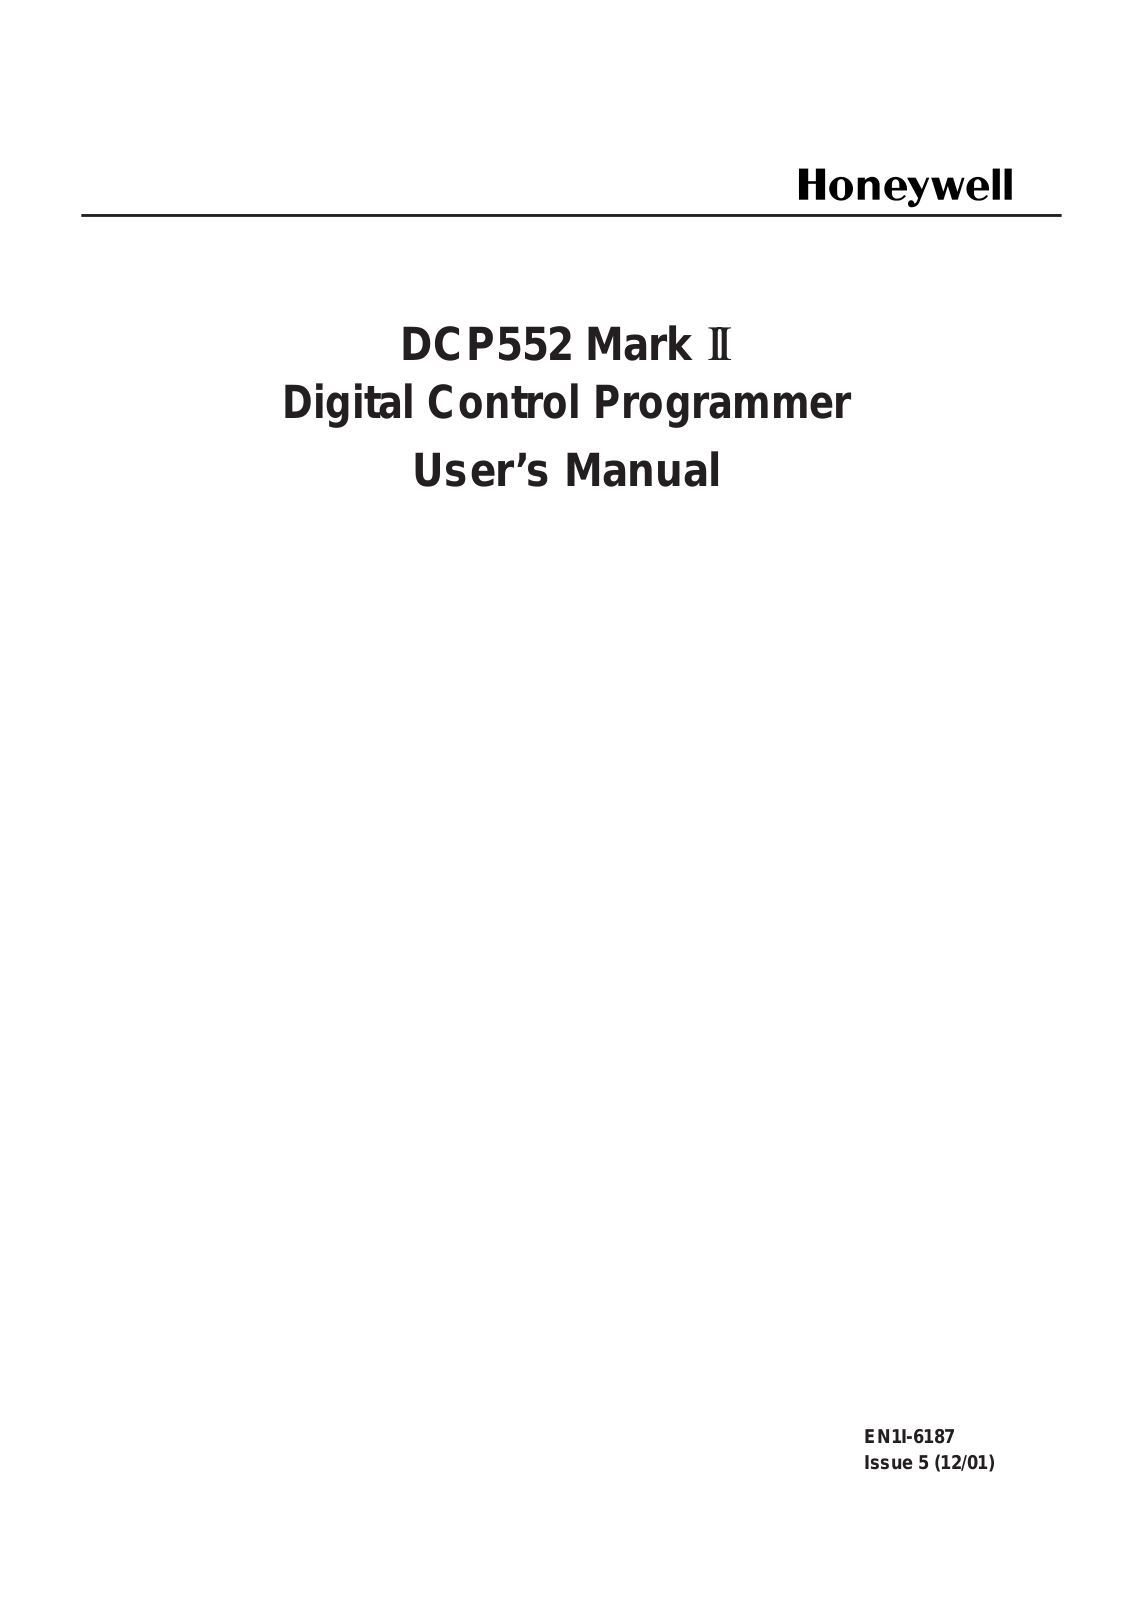 Honeywell DCP552 Mark II User Manual